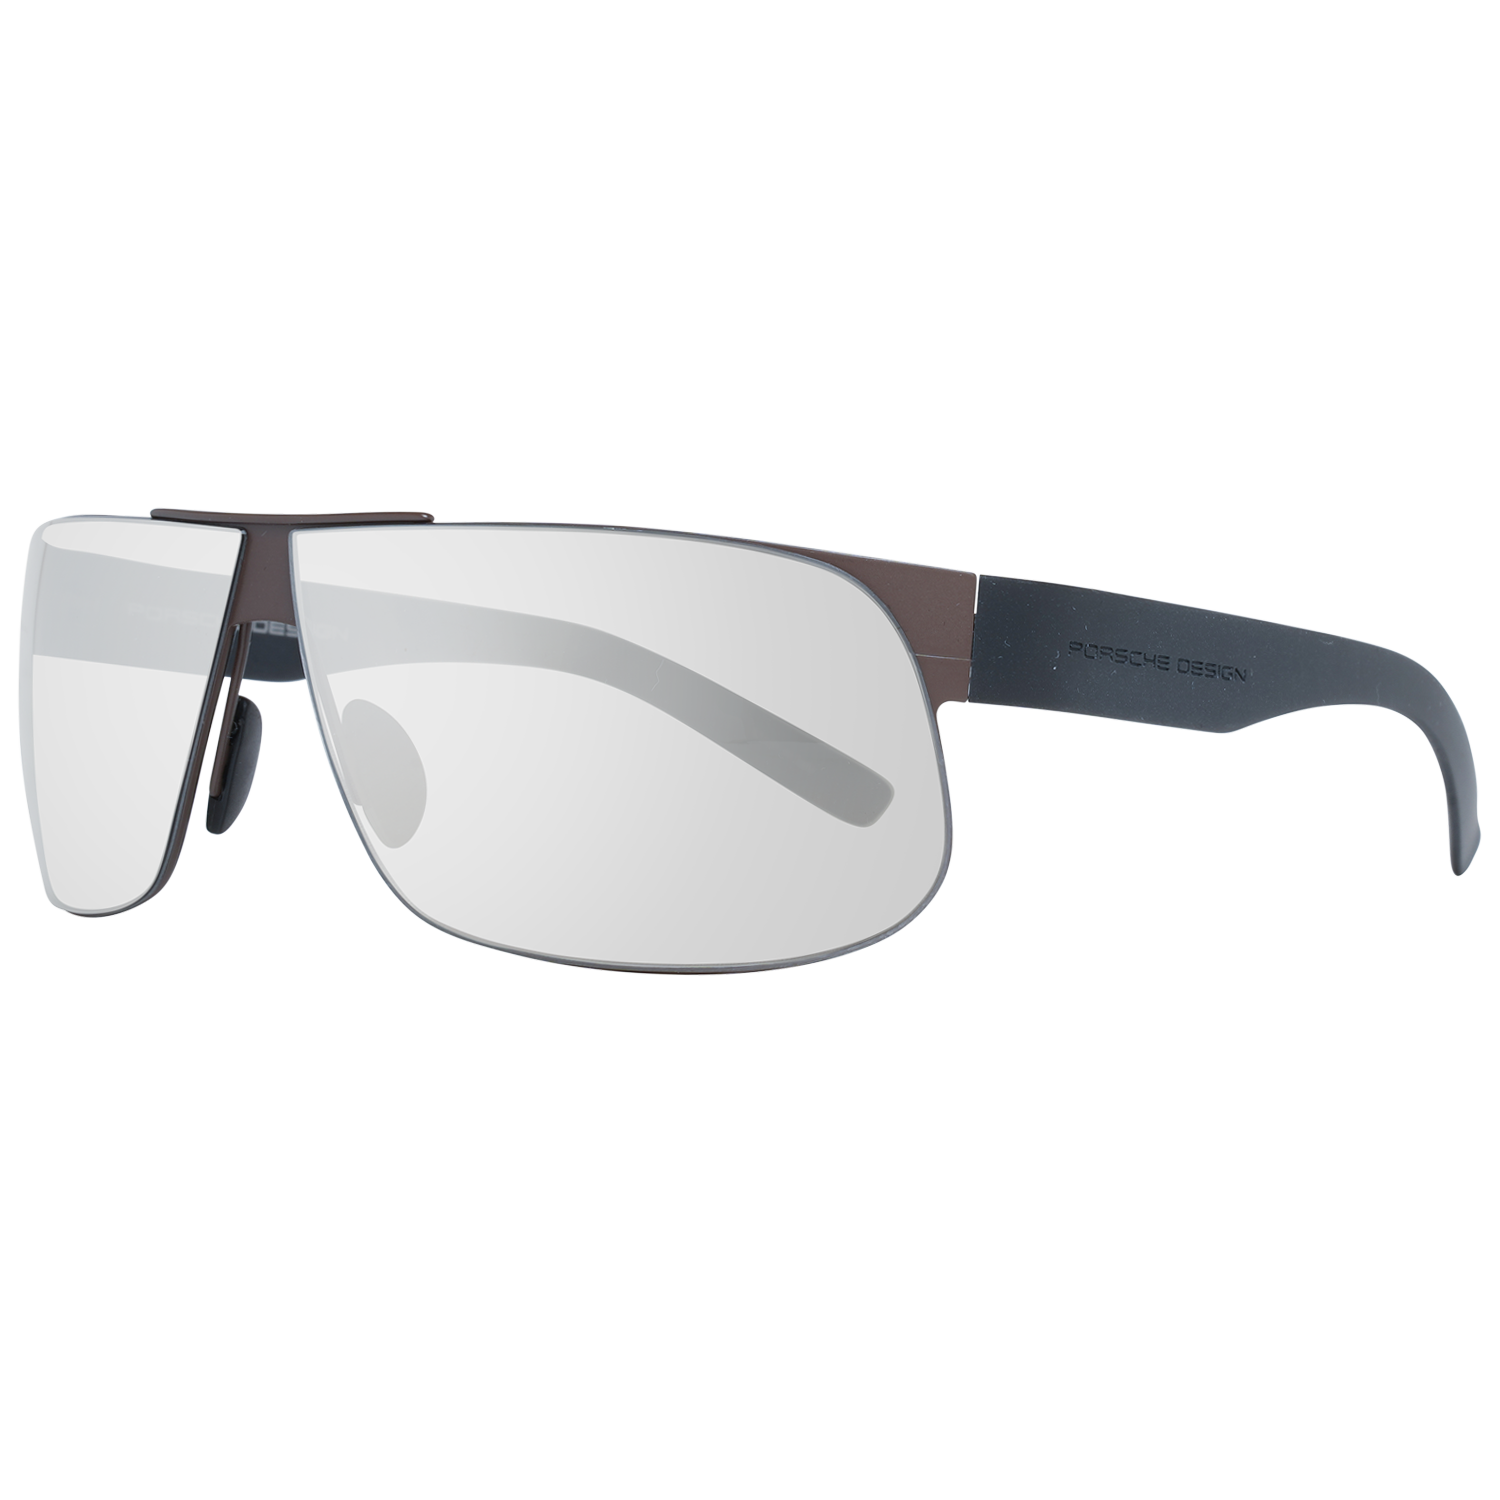 Porsche Design Sunglasses Porsche Design Sunglasses P8535 B 69 Titanium Eyeglasses Eyewear UK USA Australia 